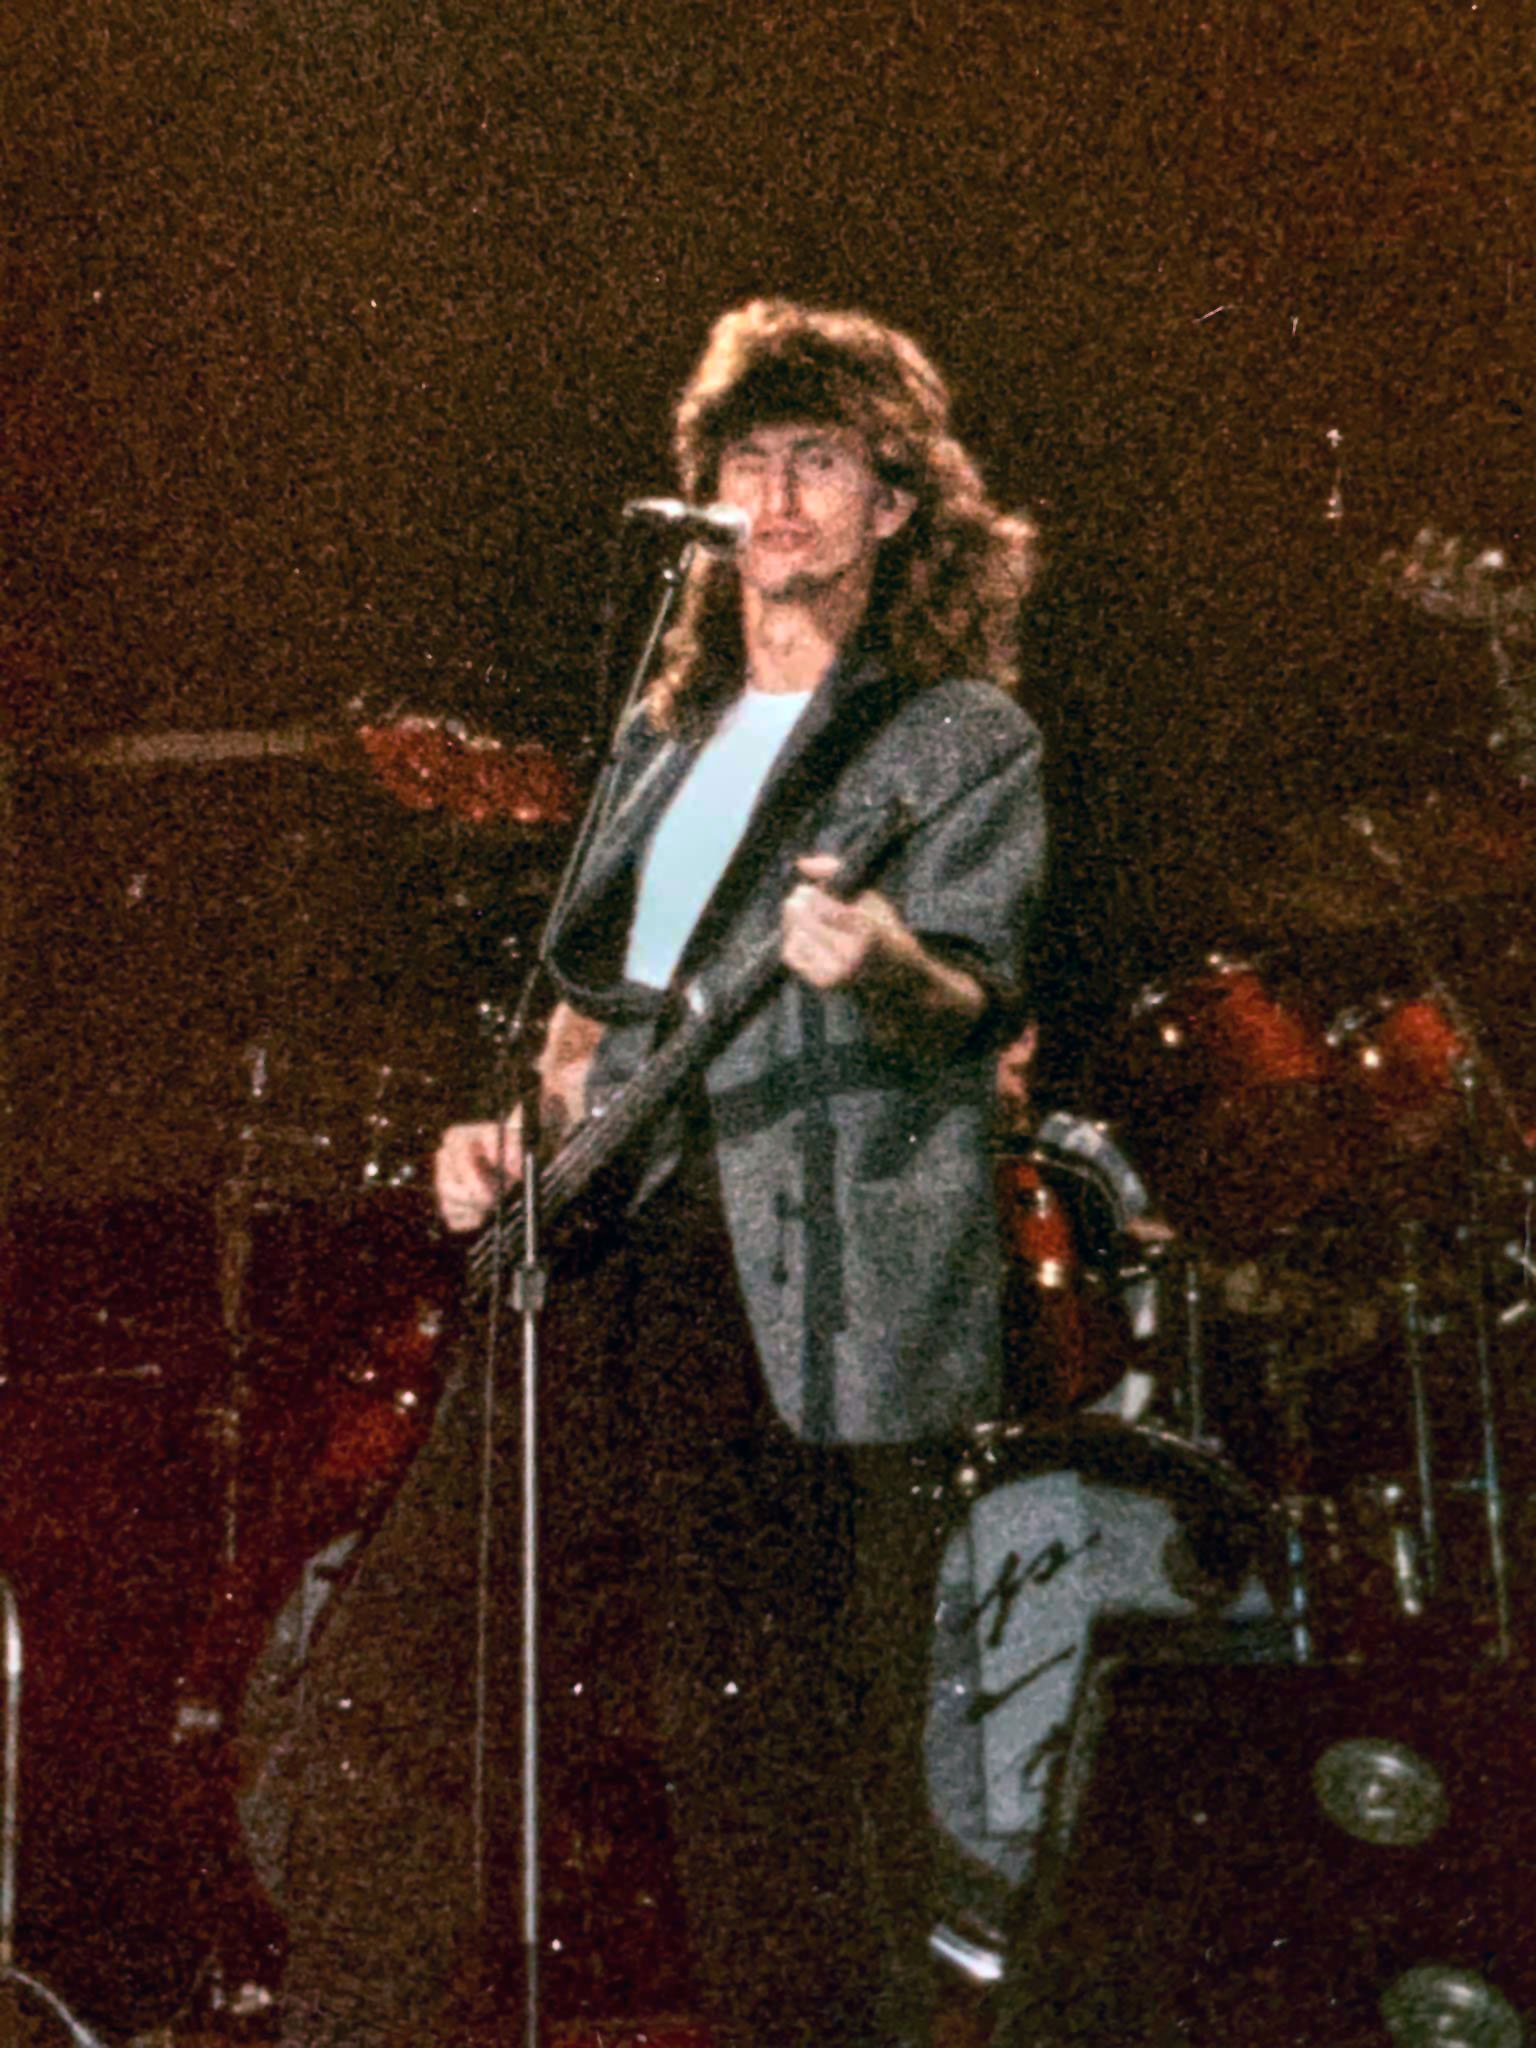 Rush - Grace Under Pressure Tour Pictures - New Haven Veteran's Memorial Coliseum - New Haven, Connecticut - September 28, 1984